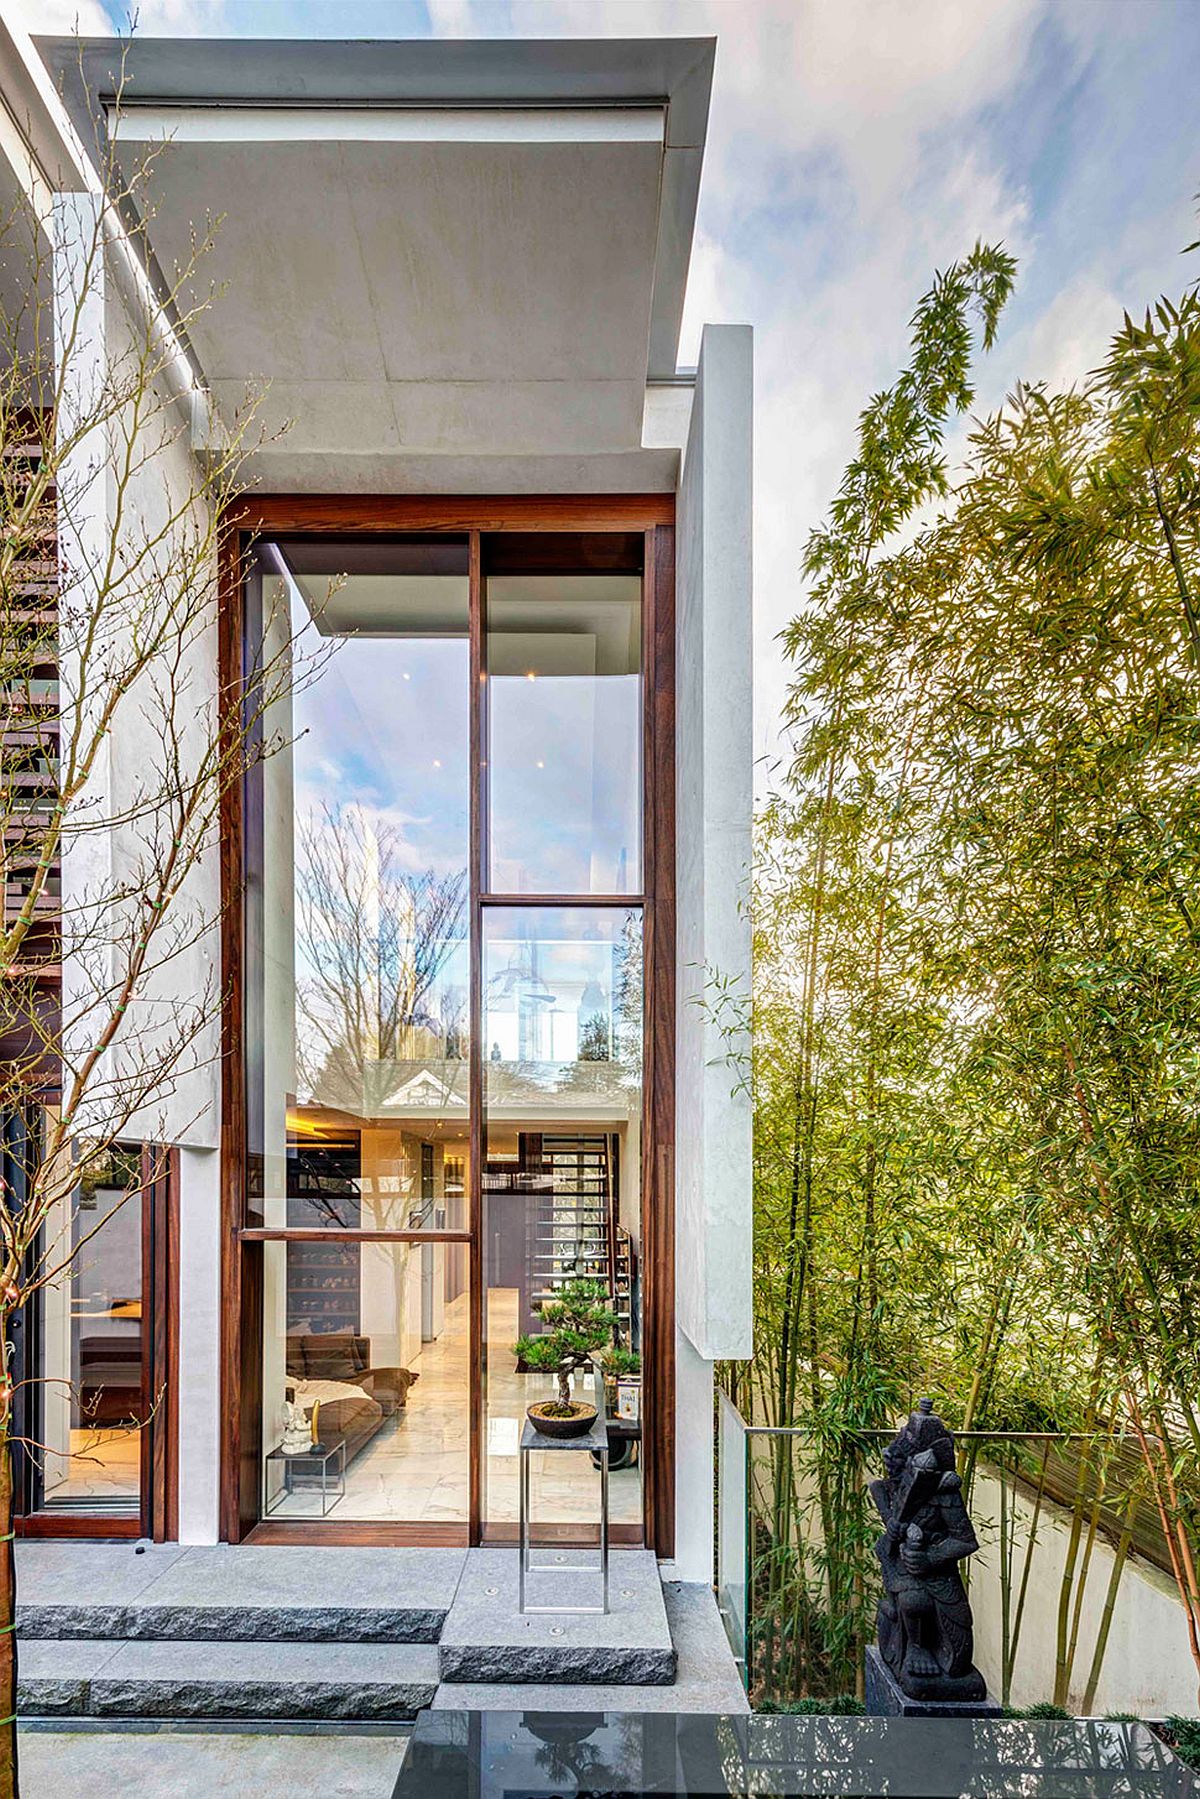 Design influences from the Far East shape contemporary Vancouver home